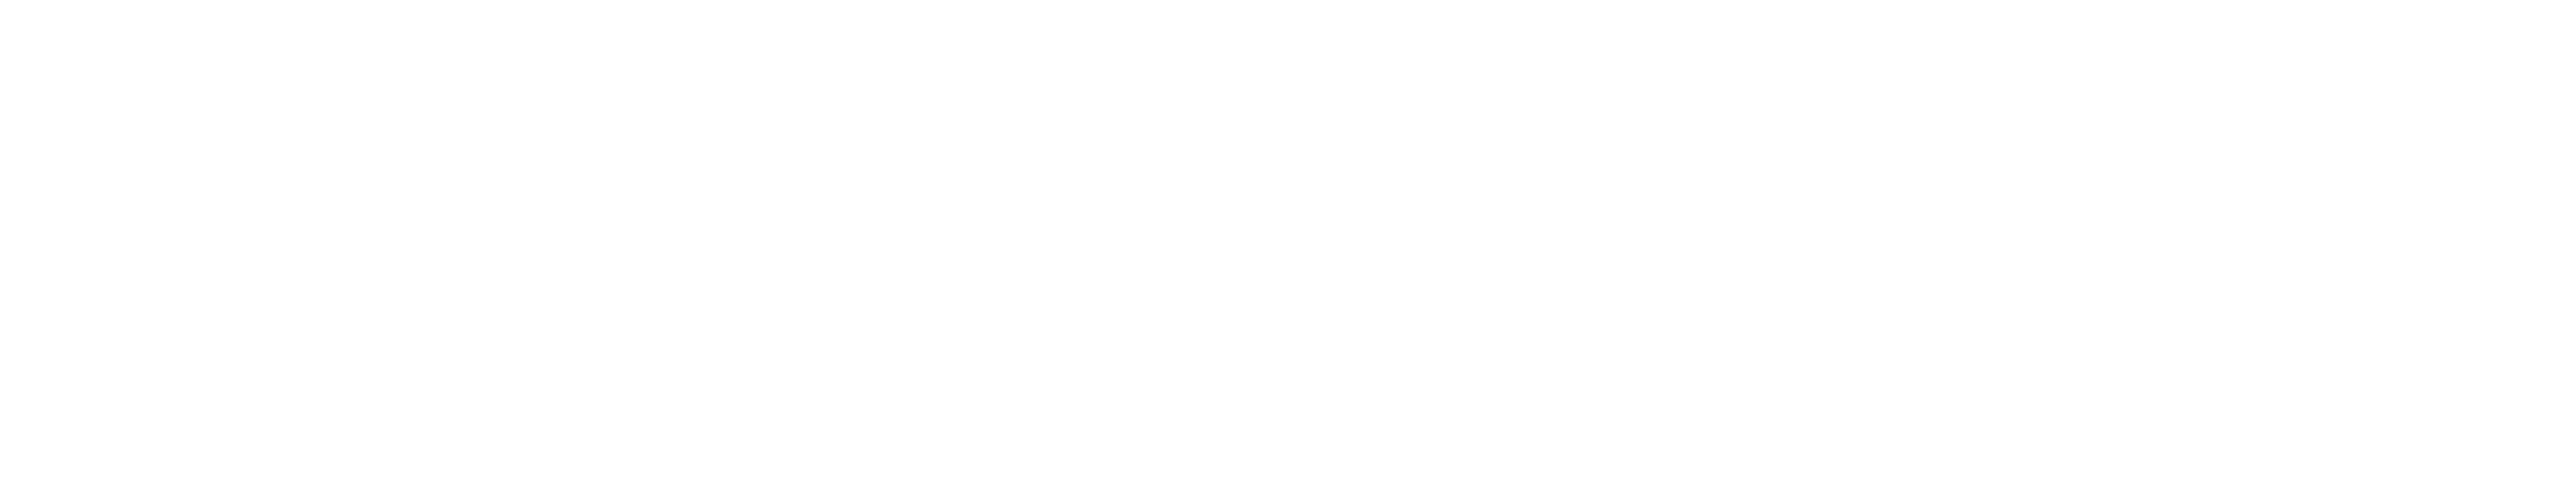 MetaWallet Brand